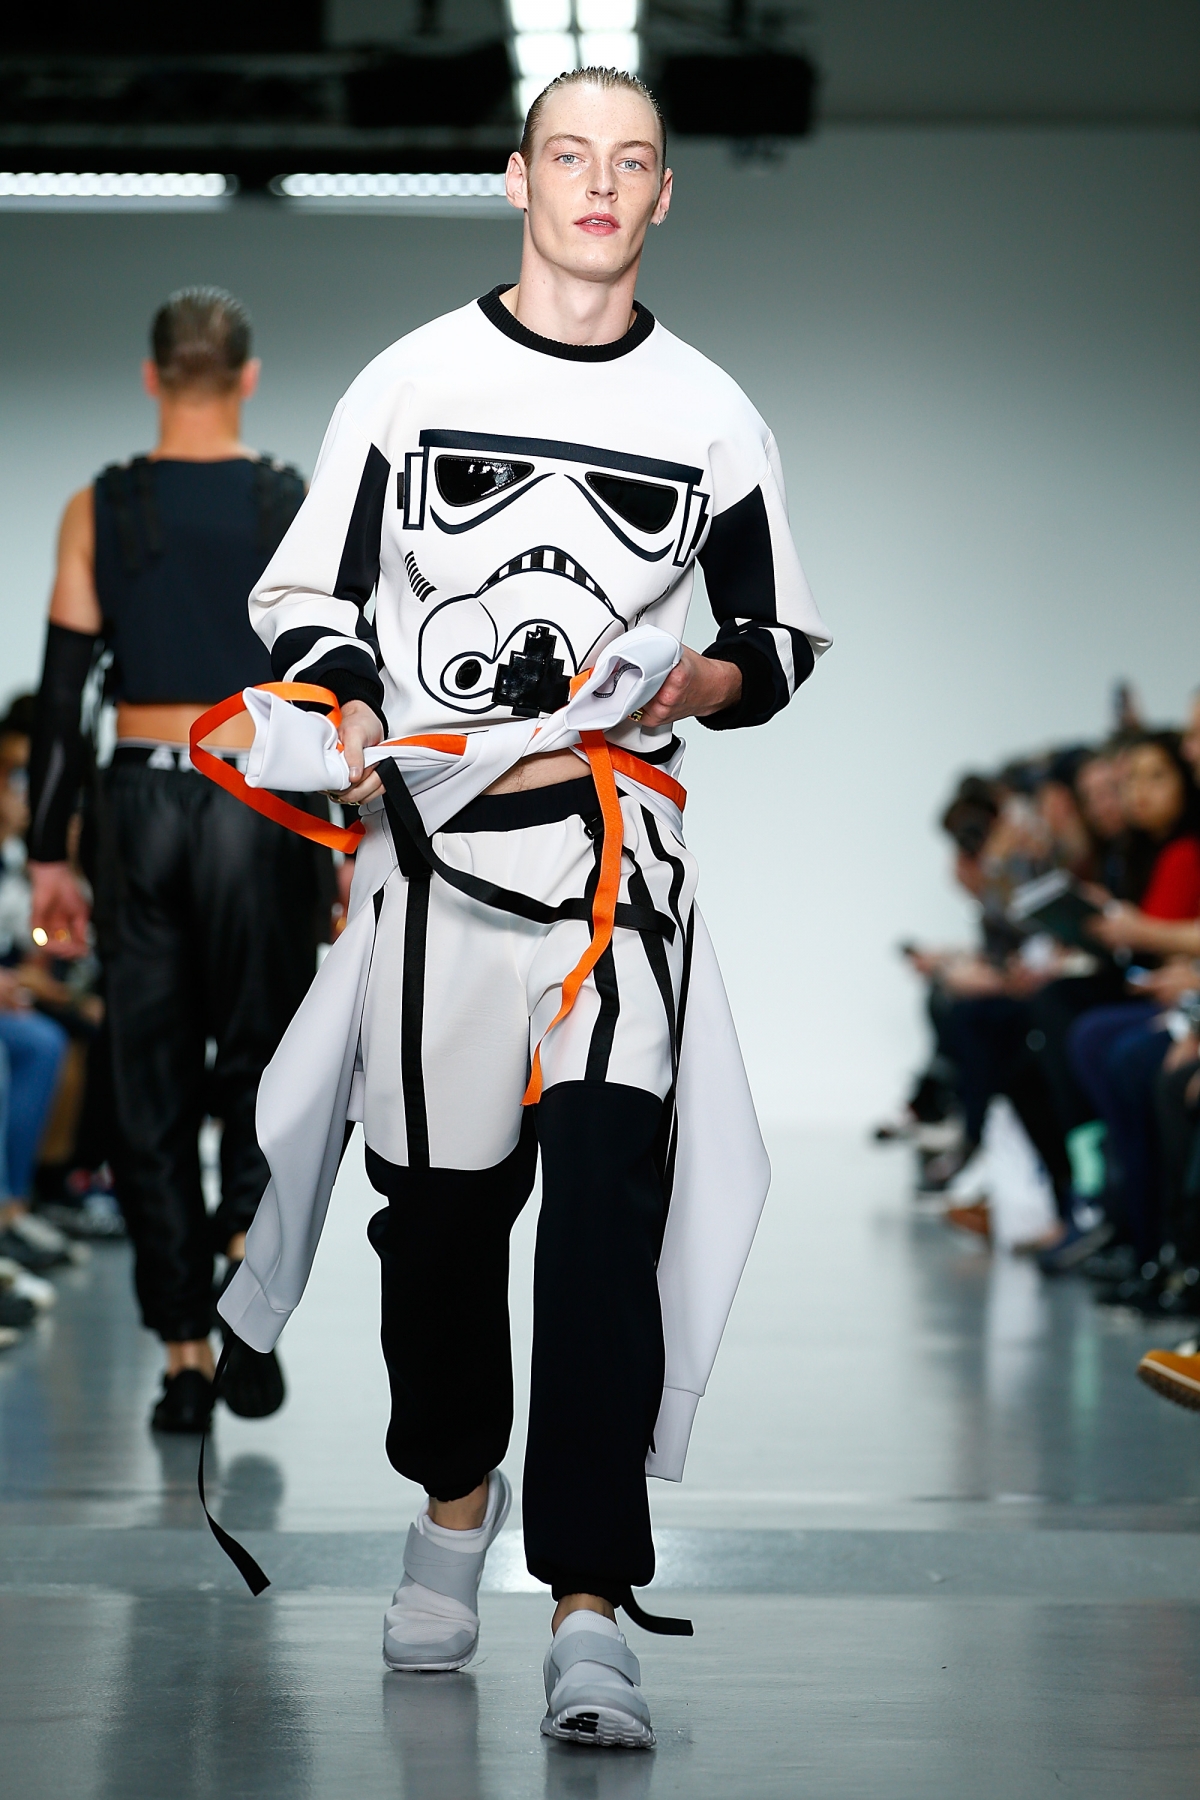 Star Wars Style: Force Awakening fashion to buy now1200 x 1800